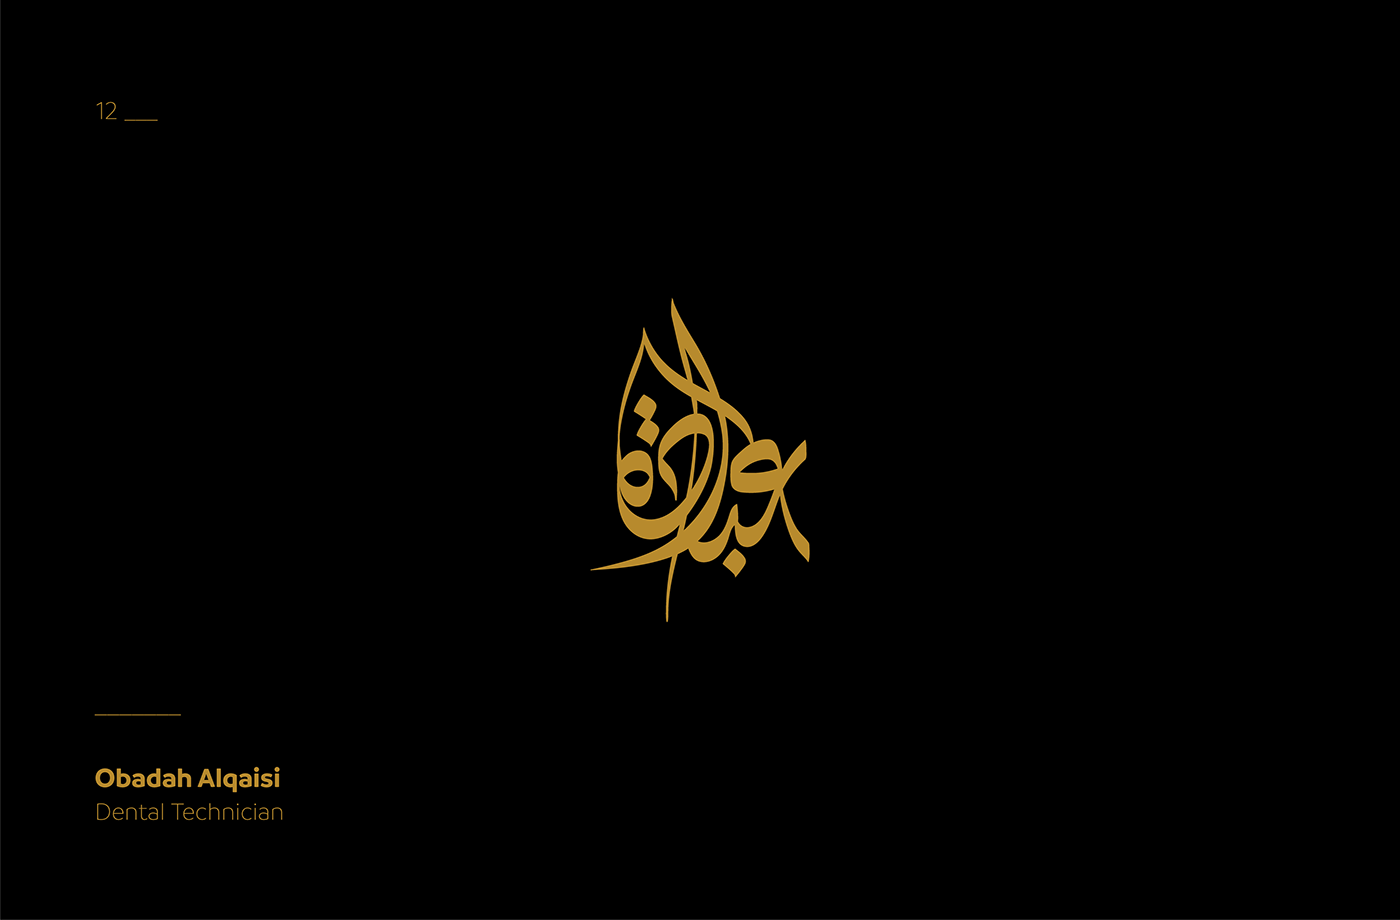 arabic arabic calligraphy Calligraphy   Khatt logos Qatar